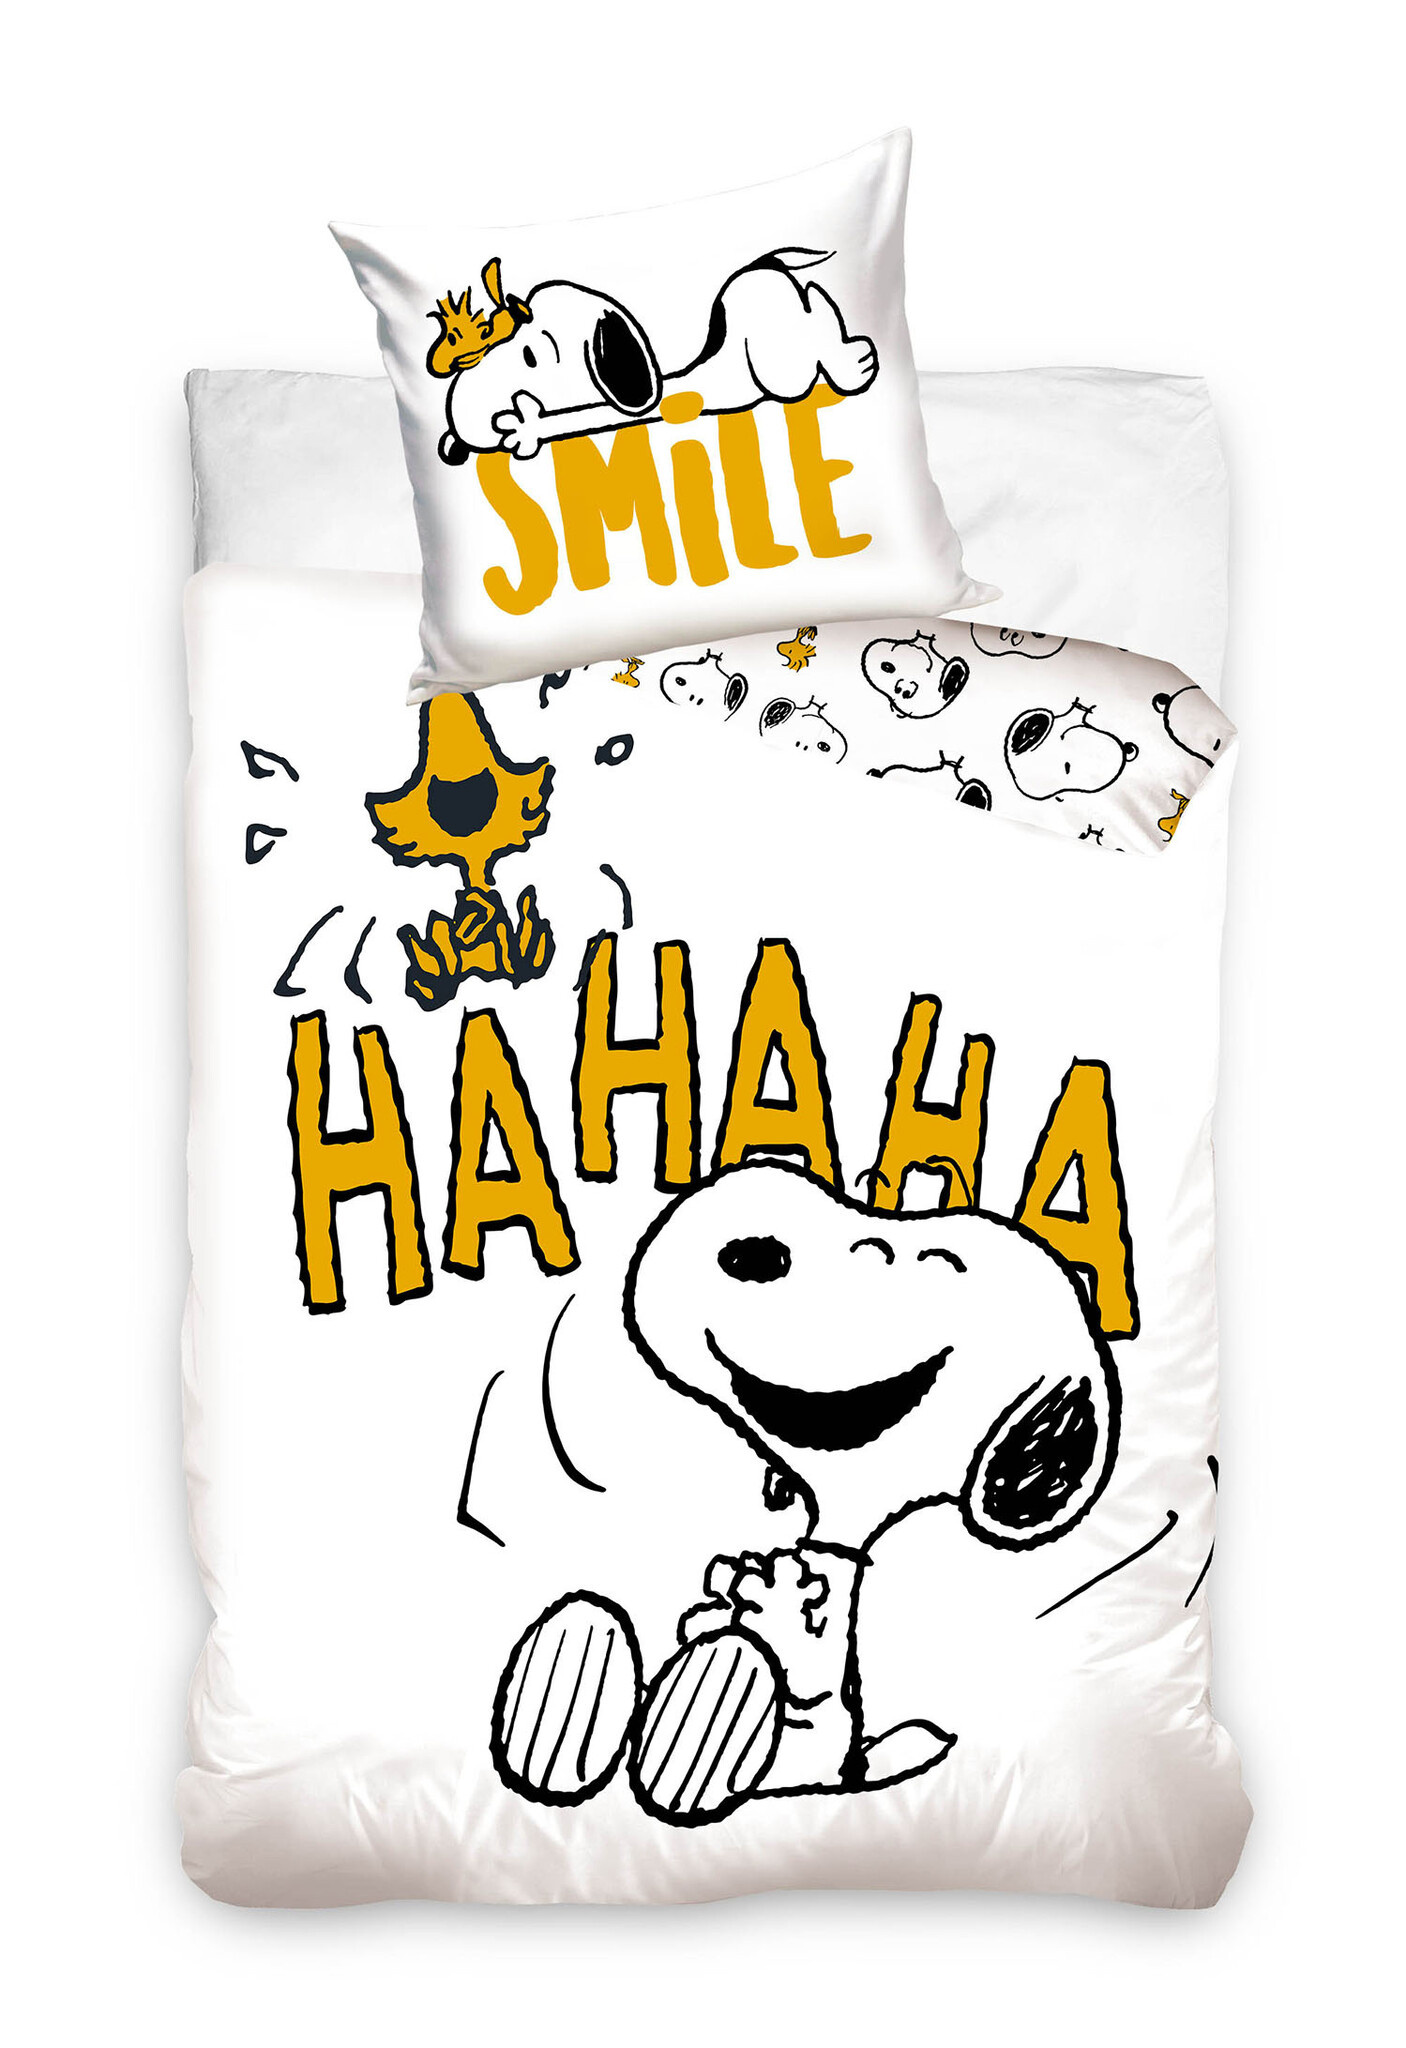 Snoopy Duvet cover, Smile - Single - 140 x 200 cm - Cotton